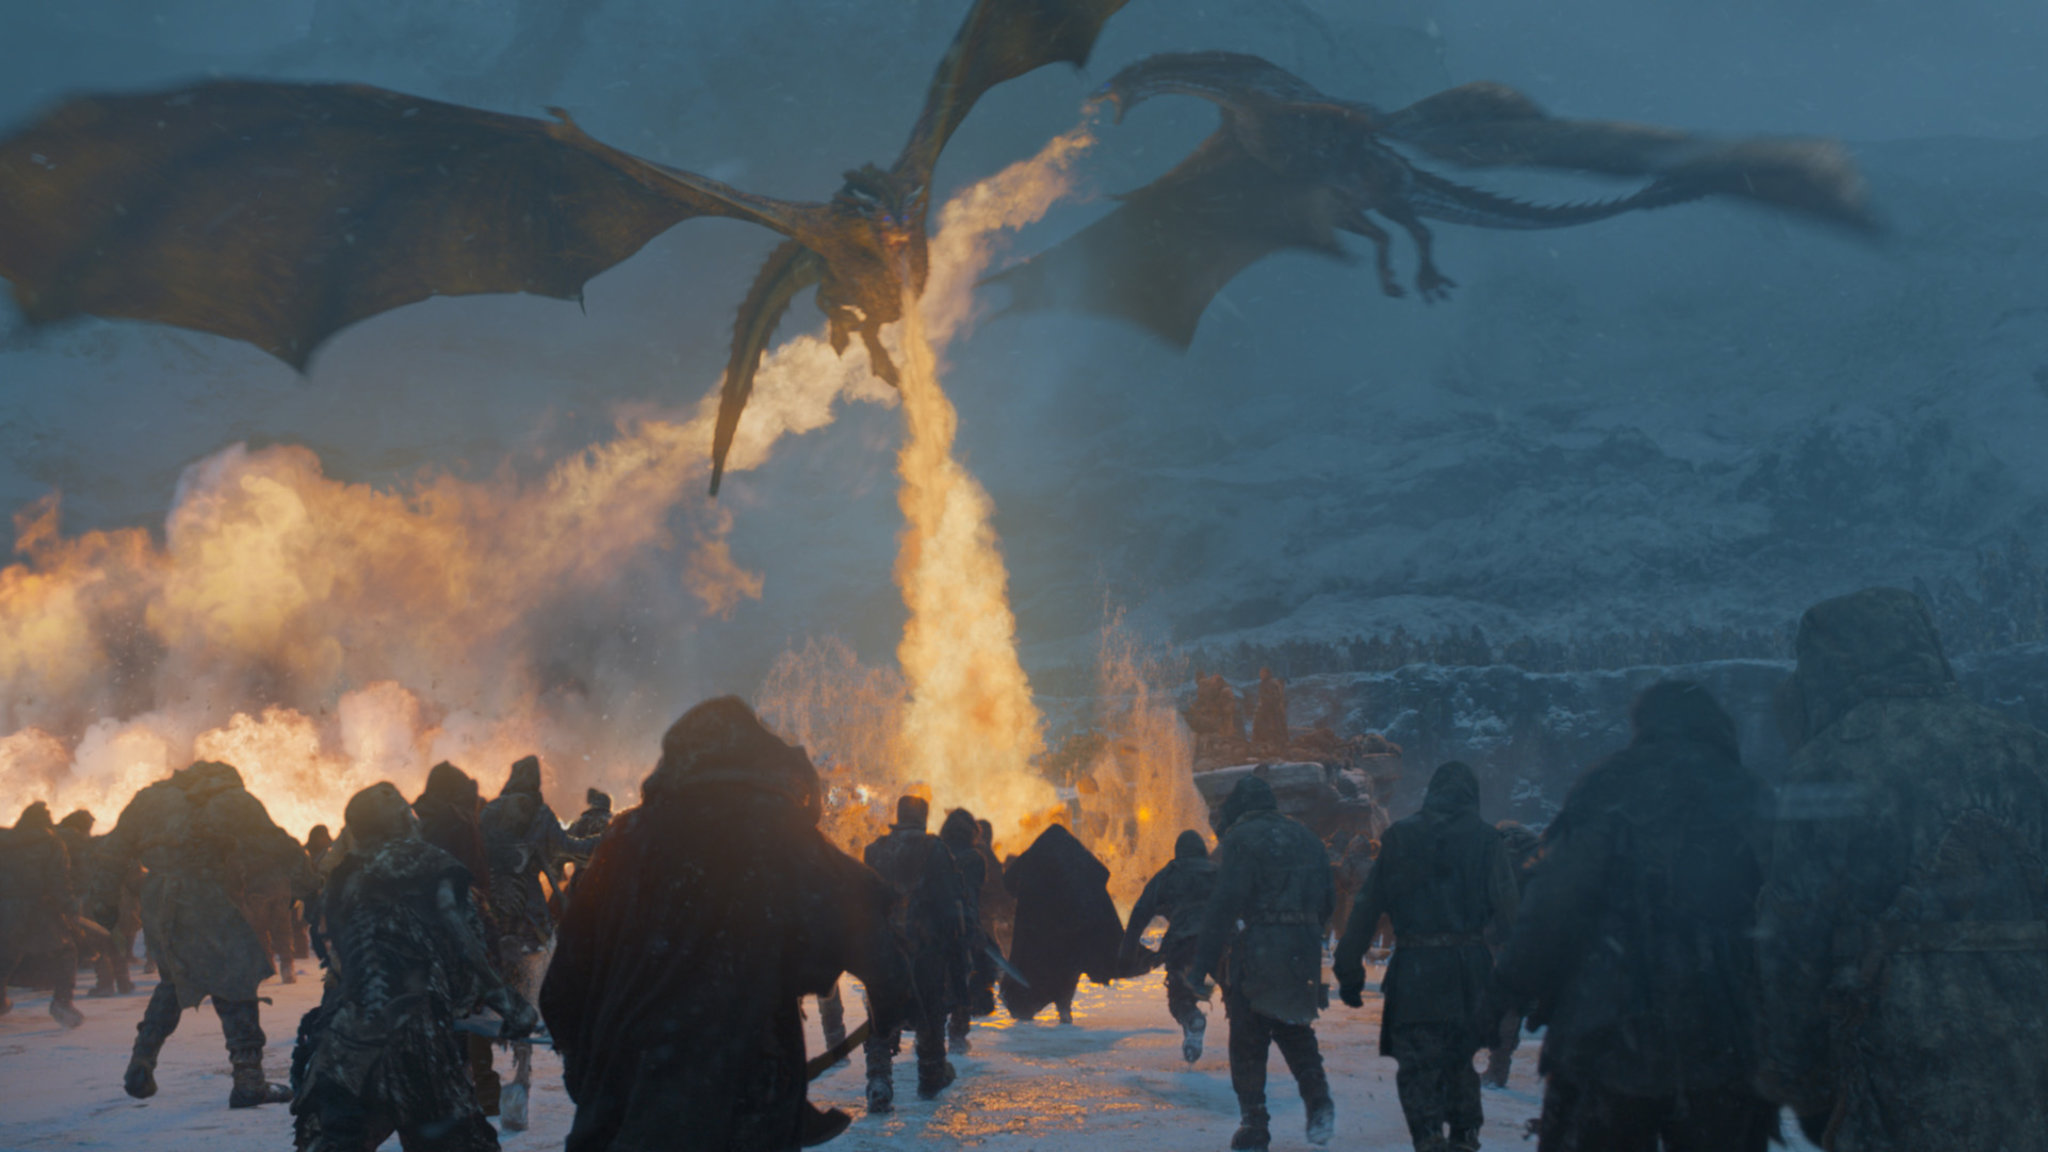 Download Game Of Thrones Season 7 Episode 6 online, free